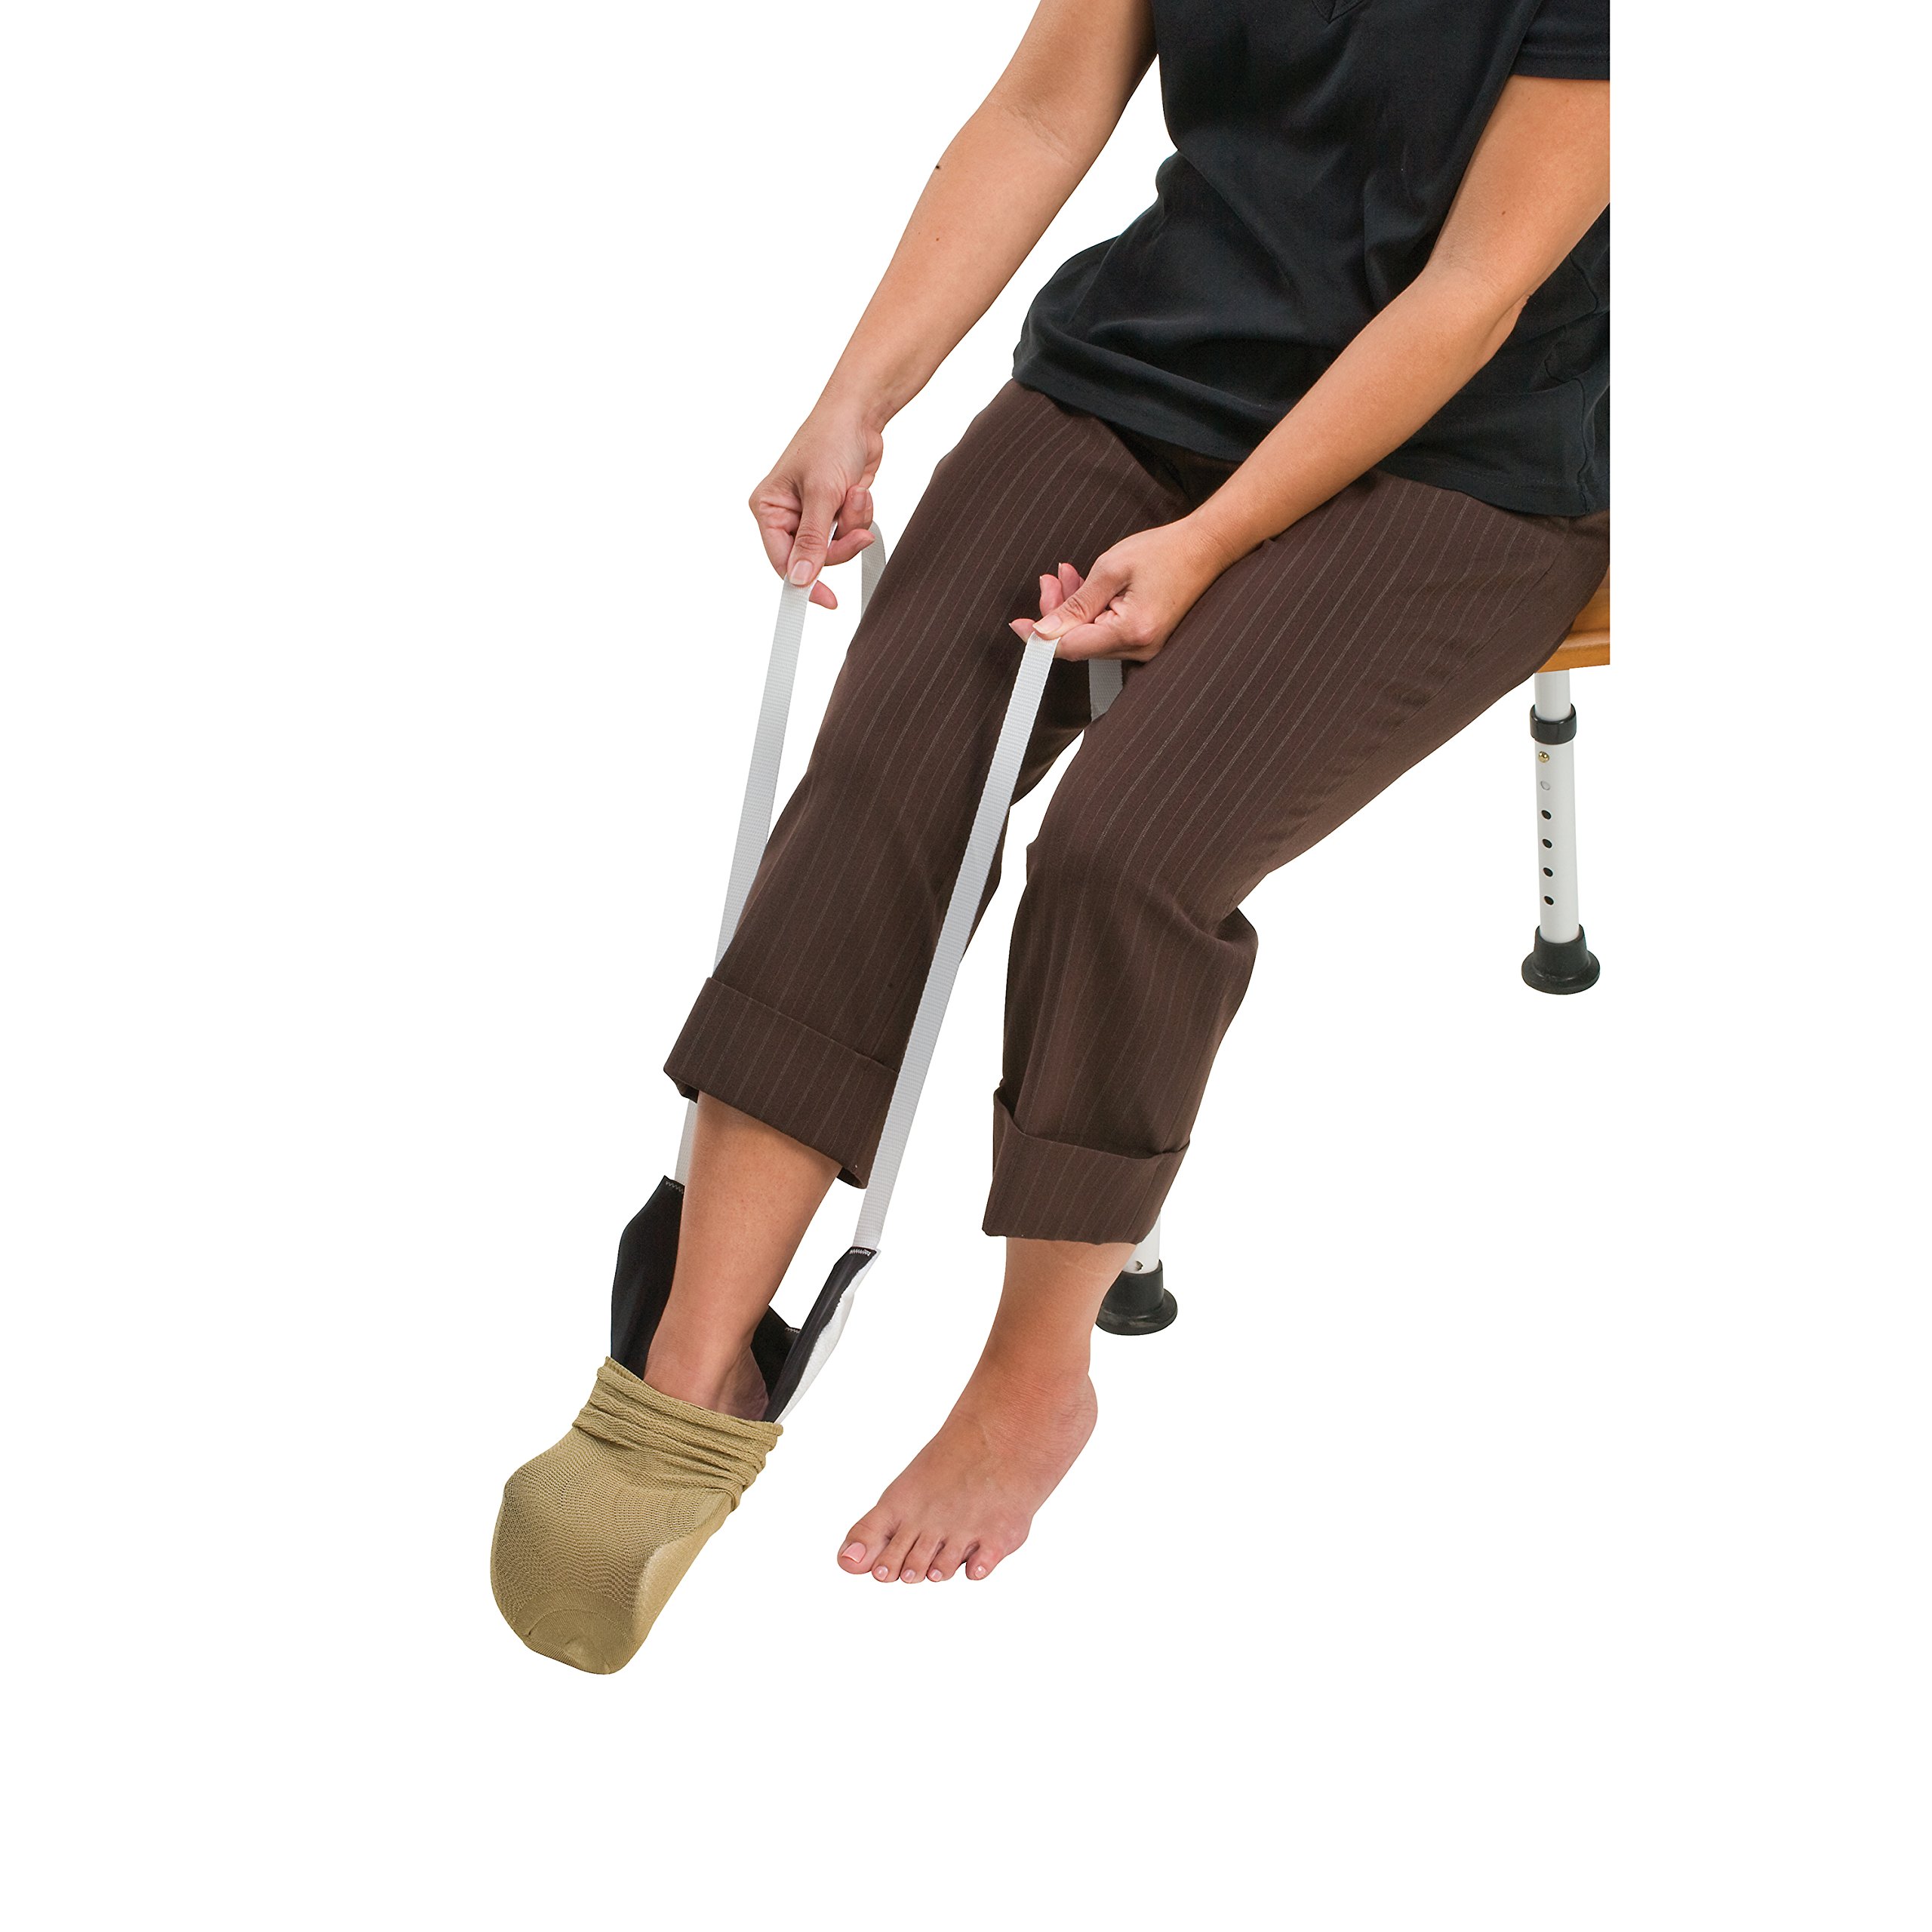 DMI Deluxe Sock Aid / Helper - Easily Pull on Socks Without Bending, Slip Resistance, Reliable Sock Aid Device for Seniors, White